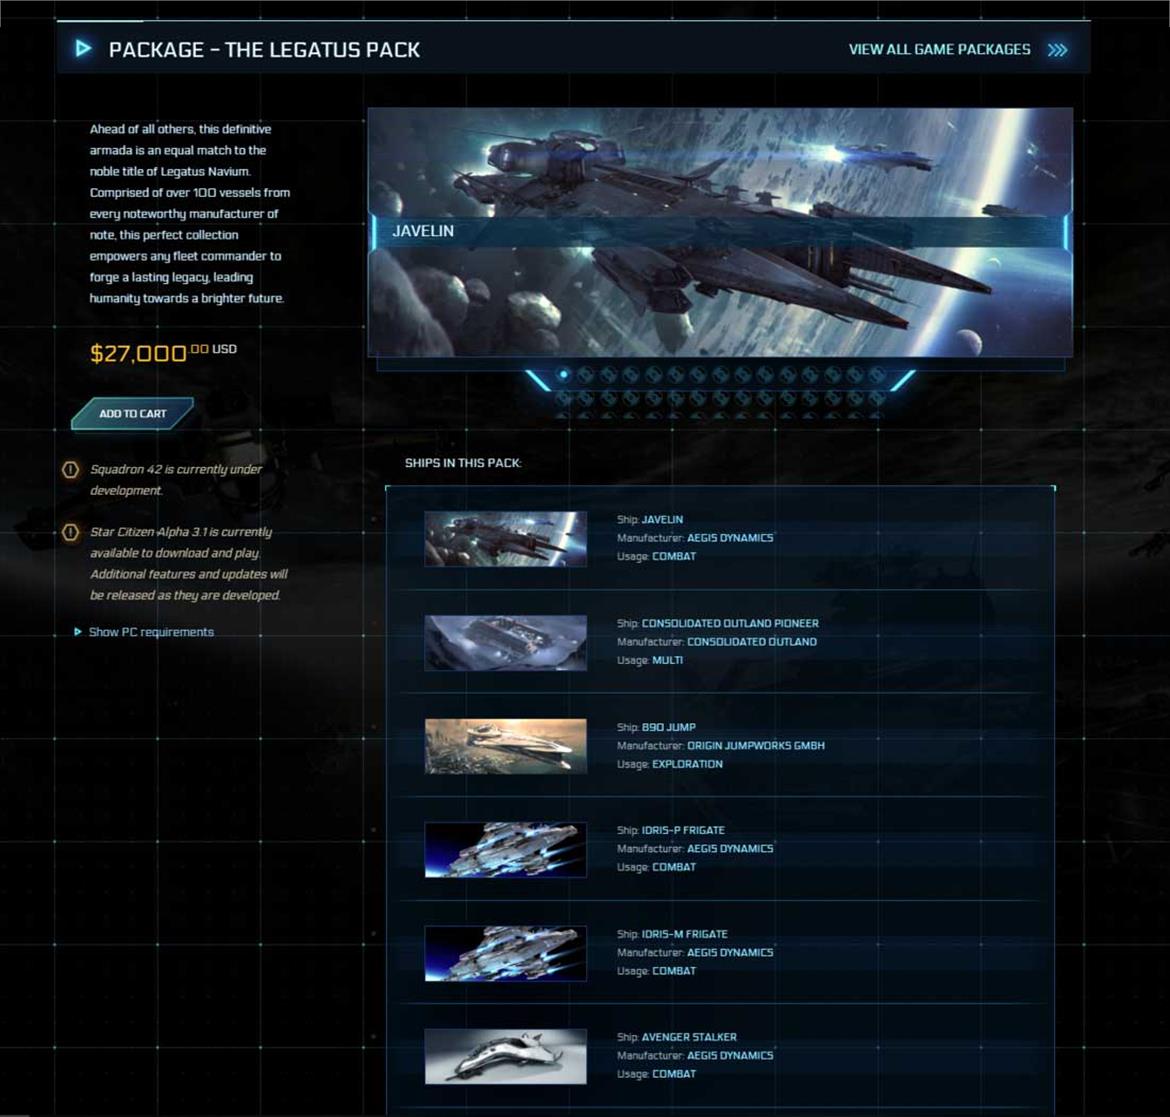 Star Citizen's Insane Legatus Pack Includes 117 Ships For $27,000